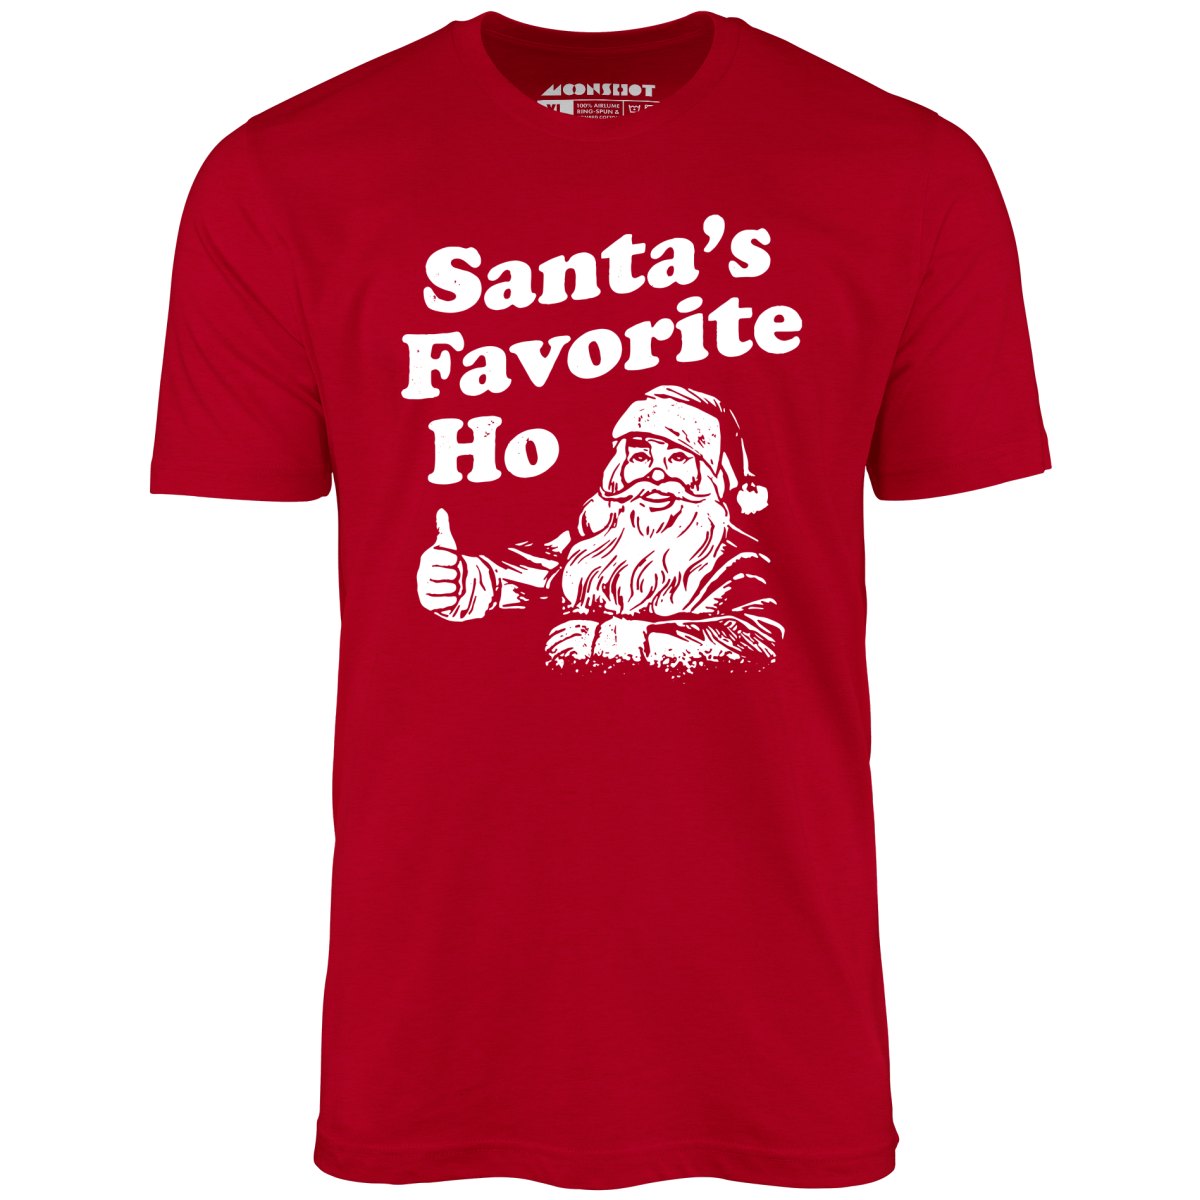 Santa's Favorite Ho - Unisex T-Shirt